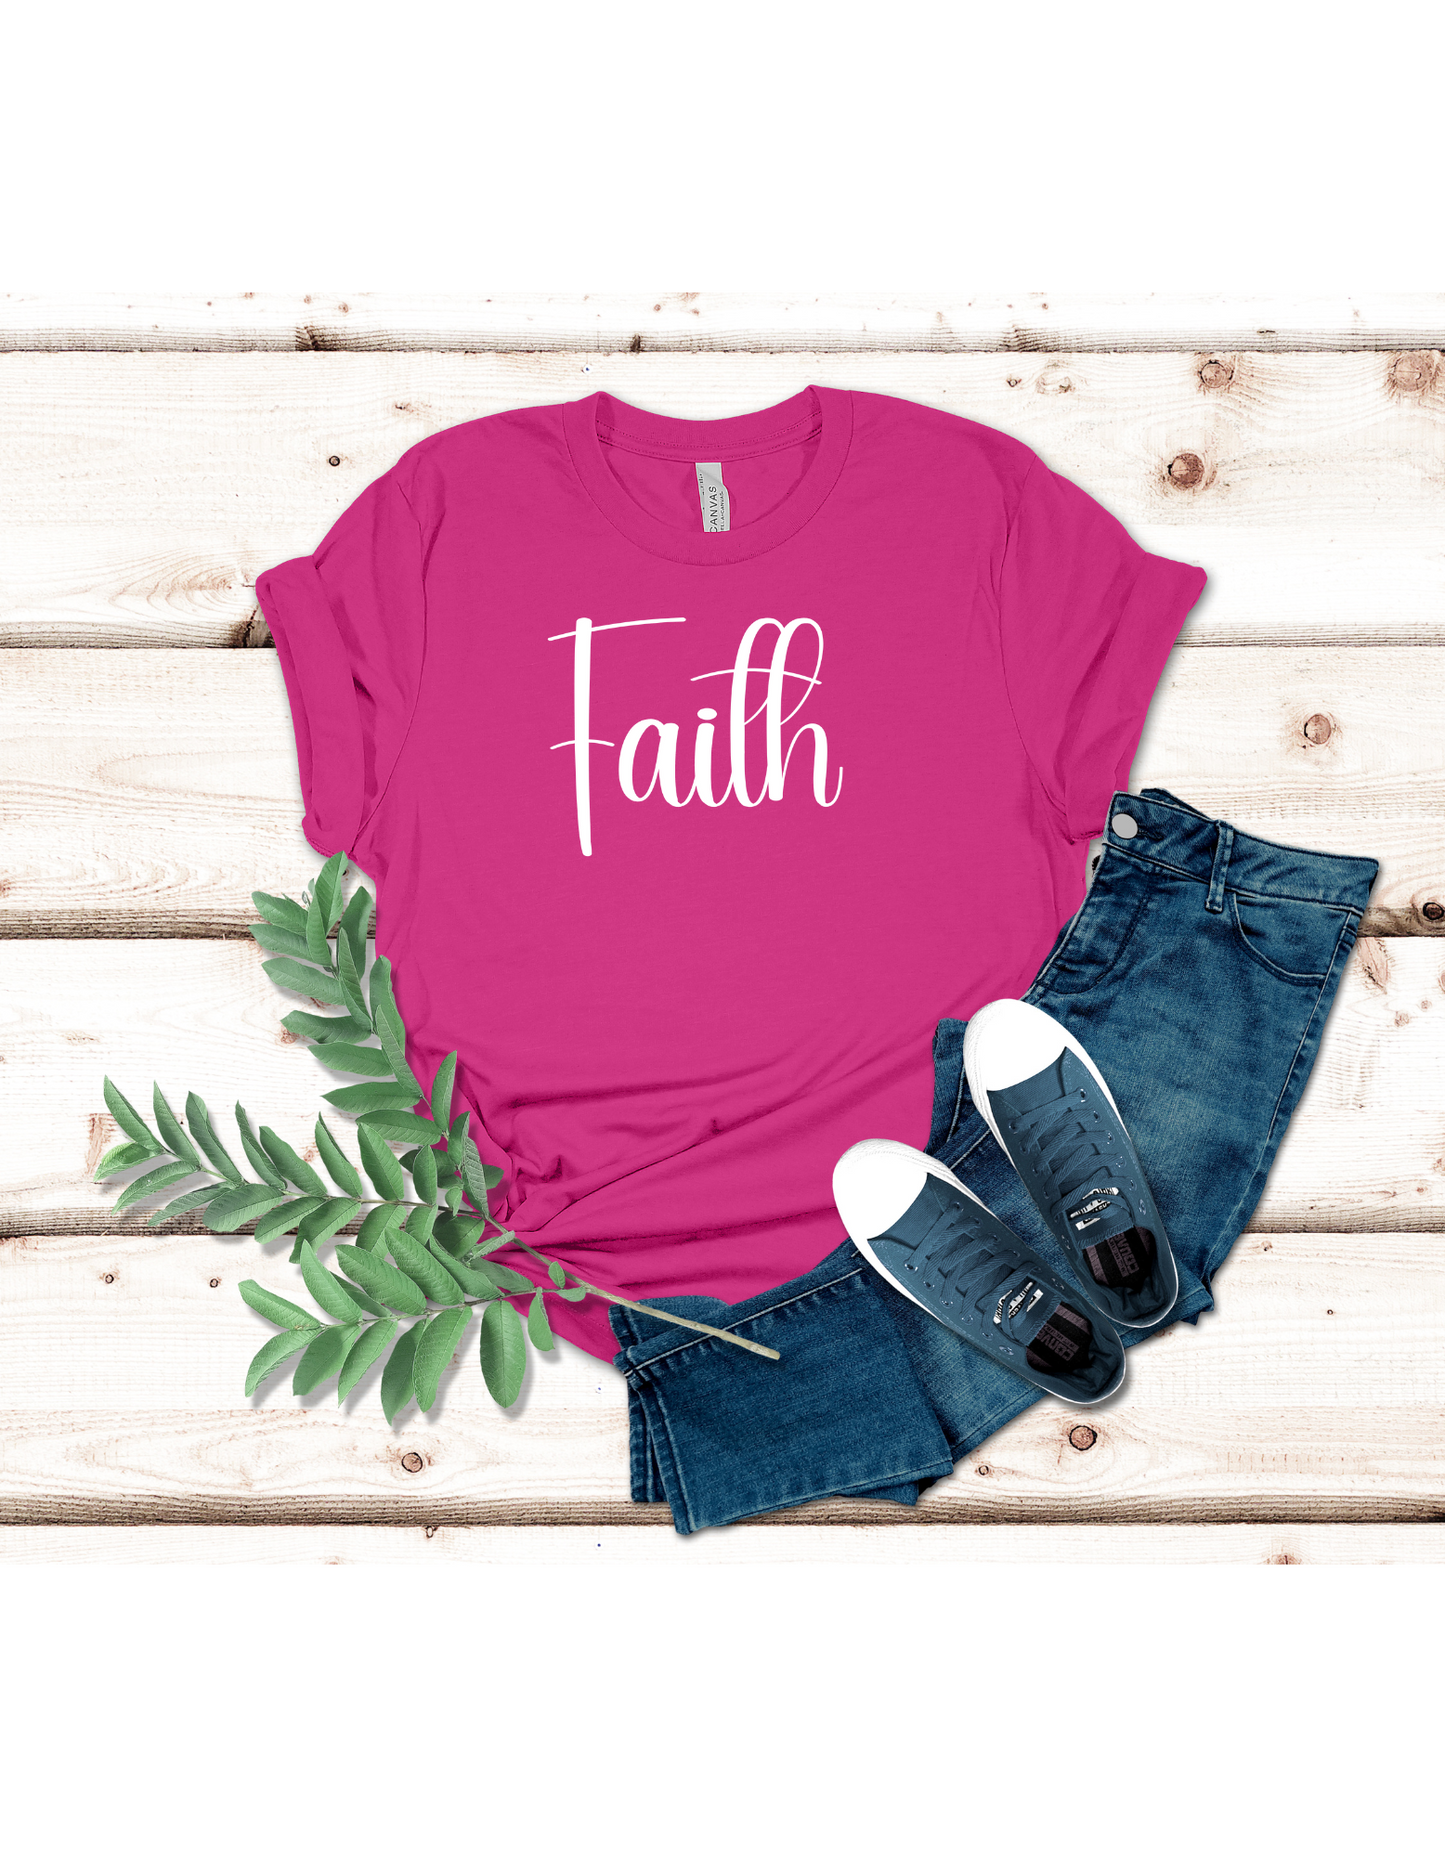 Faith Shirt, Christian Tee, Blessed Tshirt